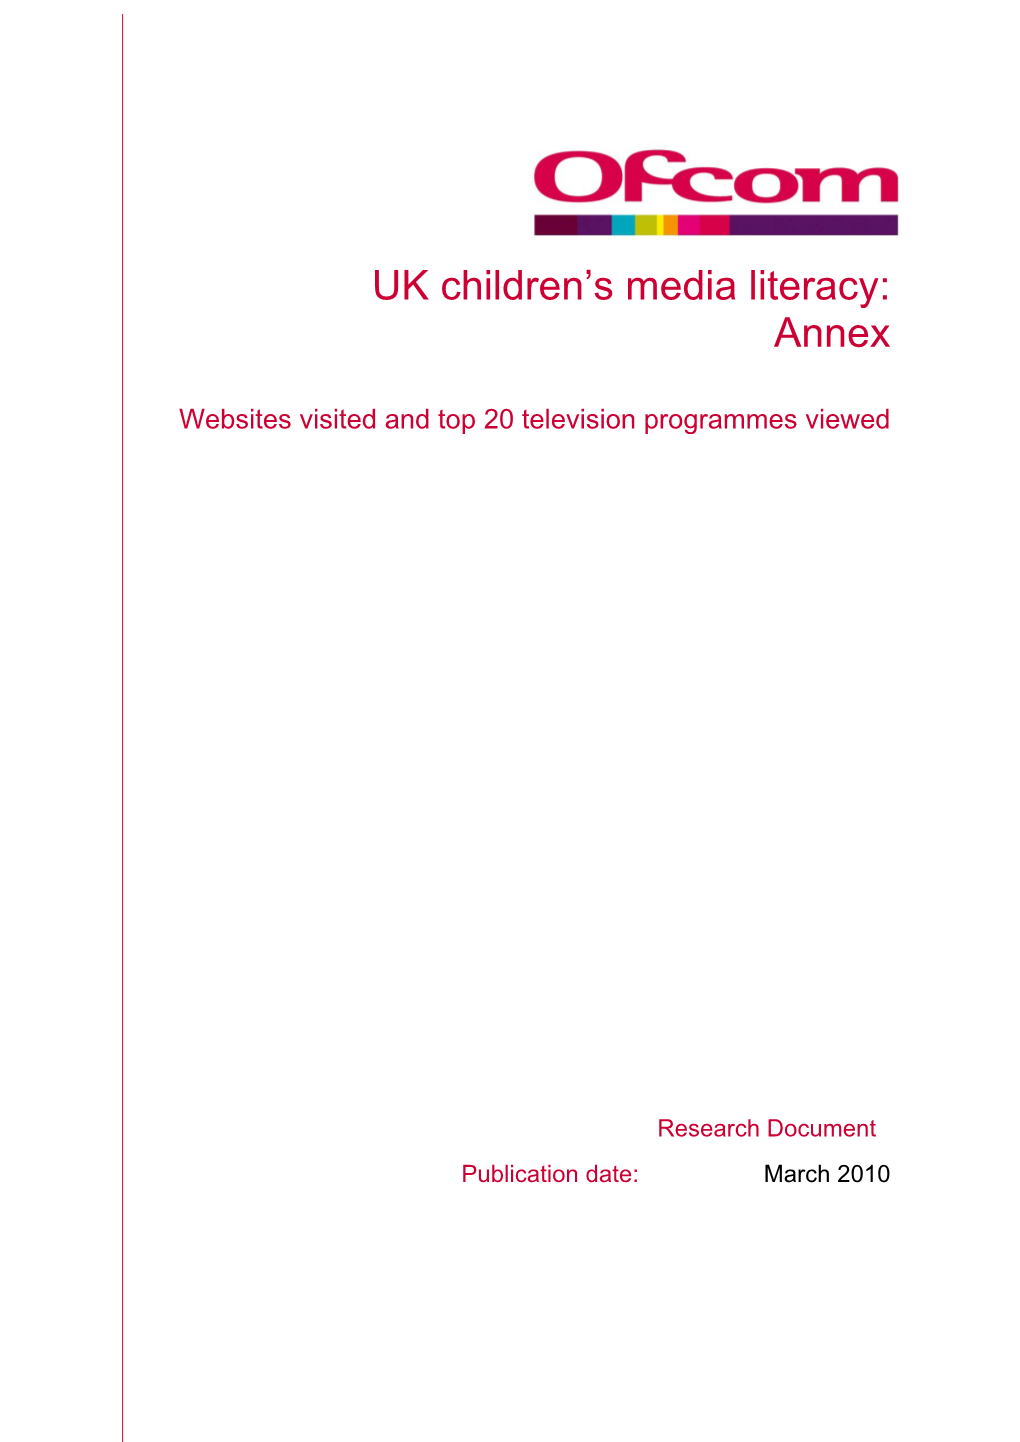 UK Children's Media Literacy: Annex